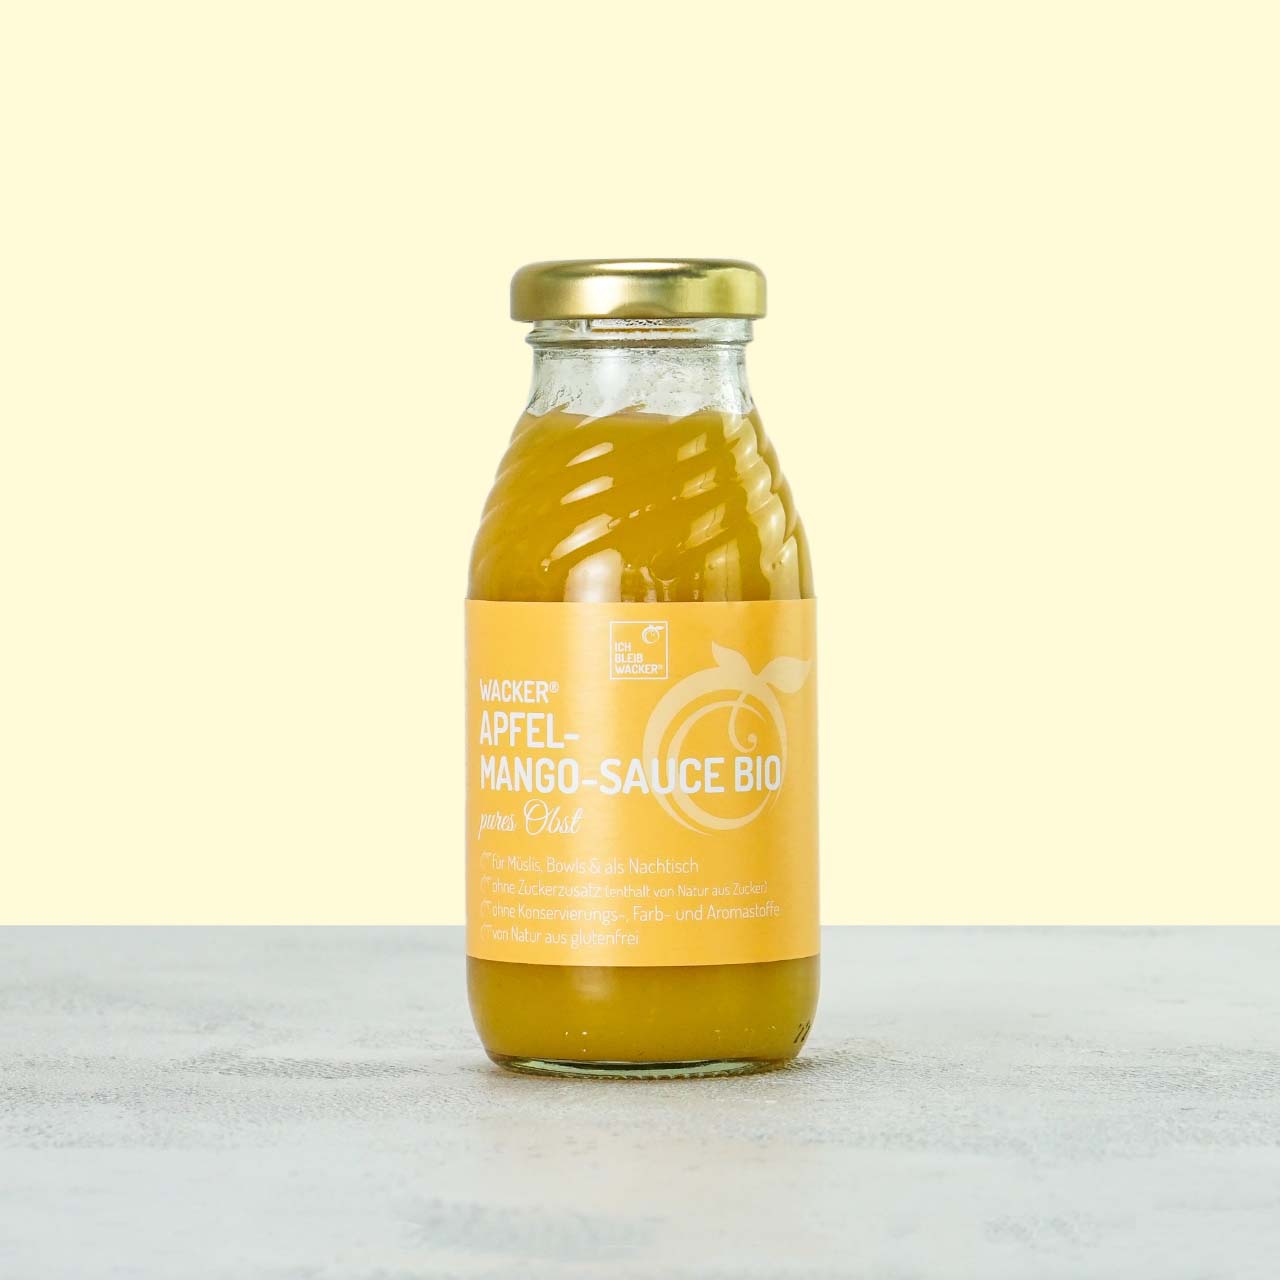 Wacker Apfel-Mango-Sauce Bio, 200 ml